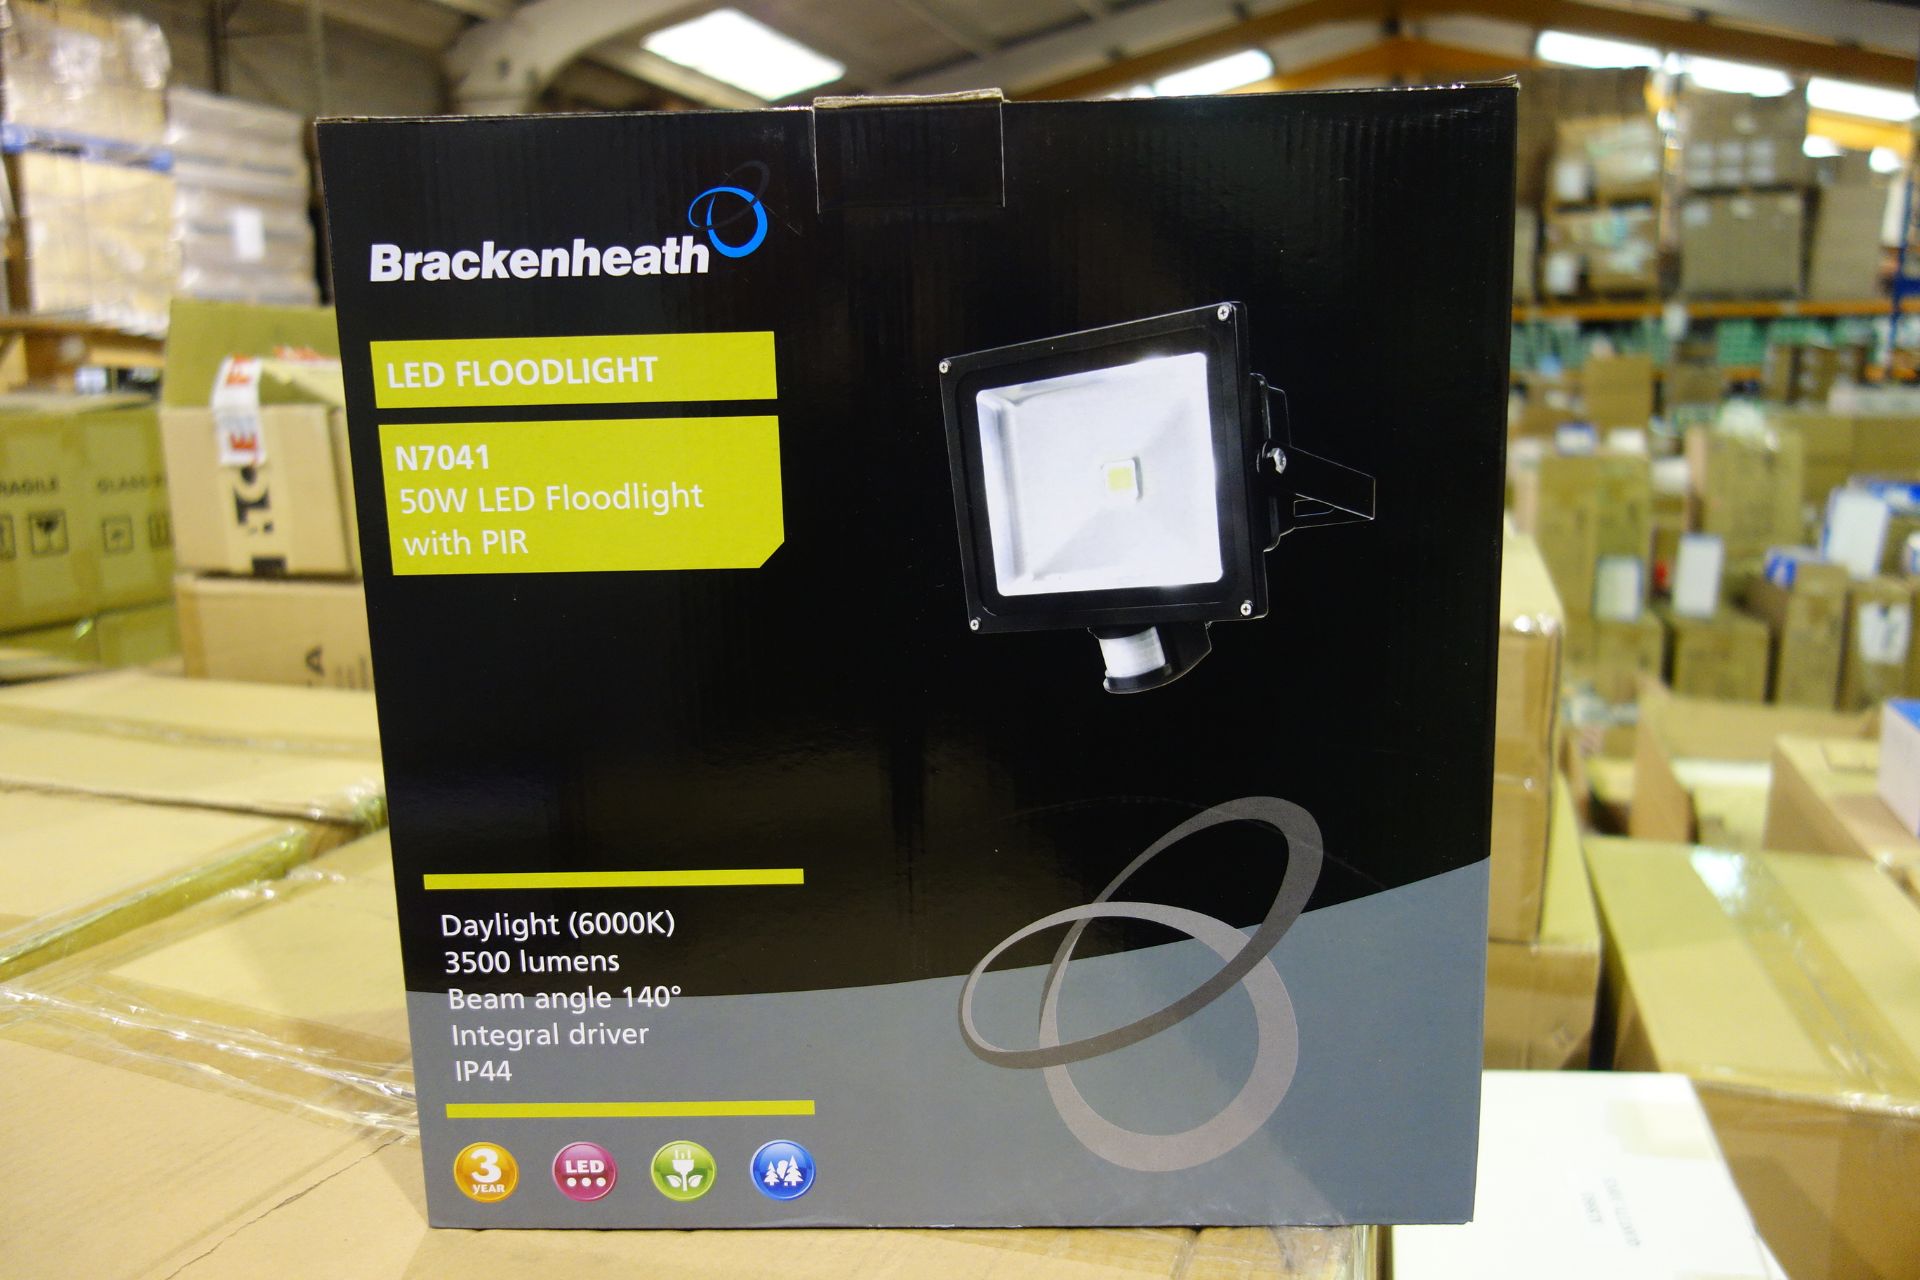 4 X Brakenheath N7041 50W LED Floodlight With PIR Daylight 6000K 1P44